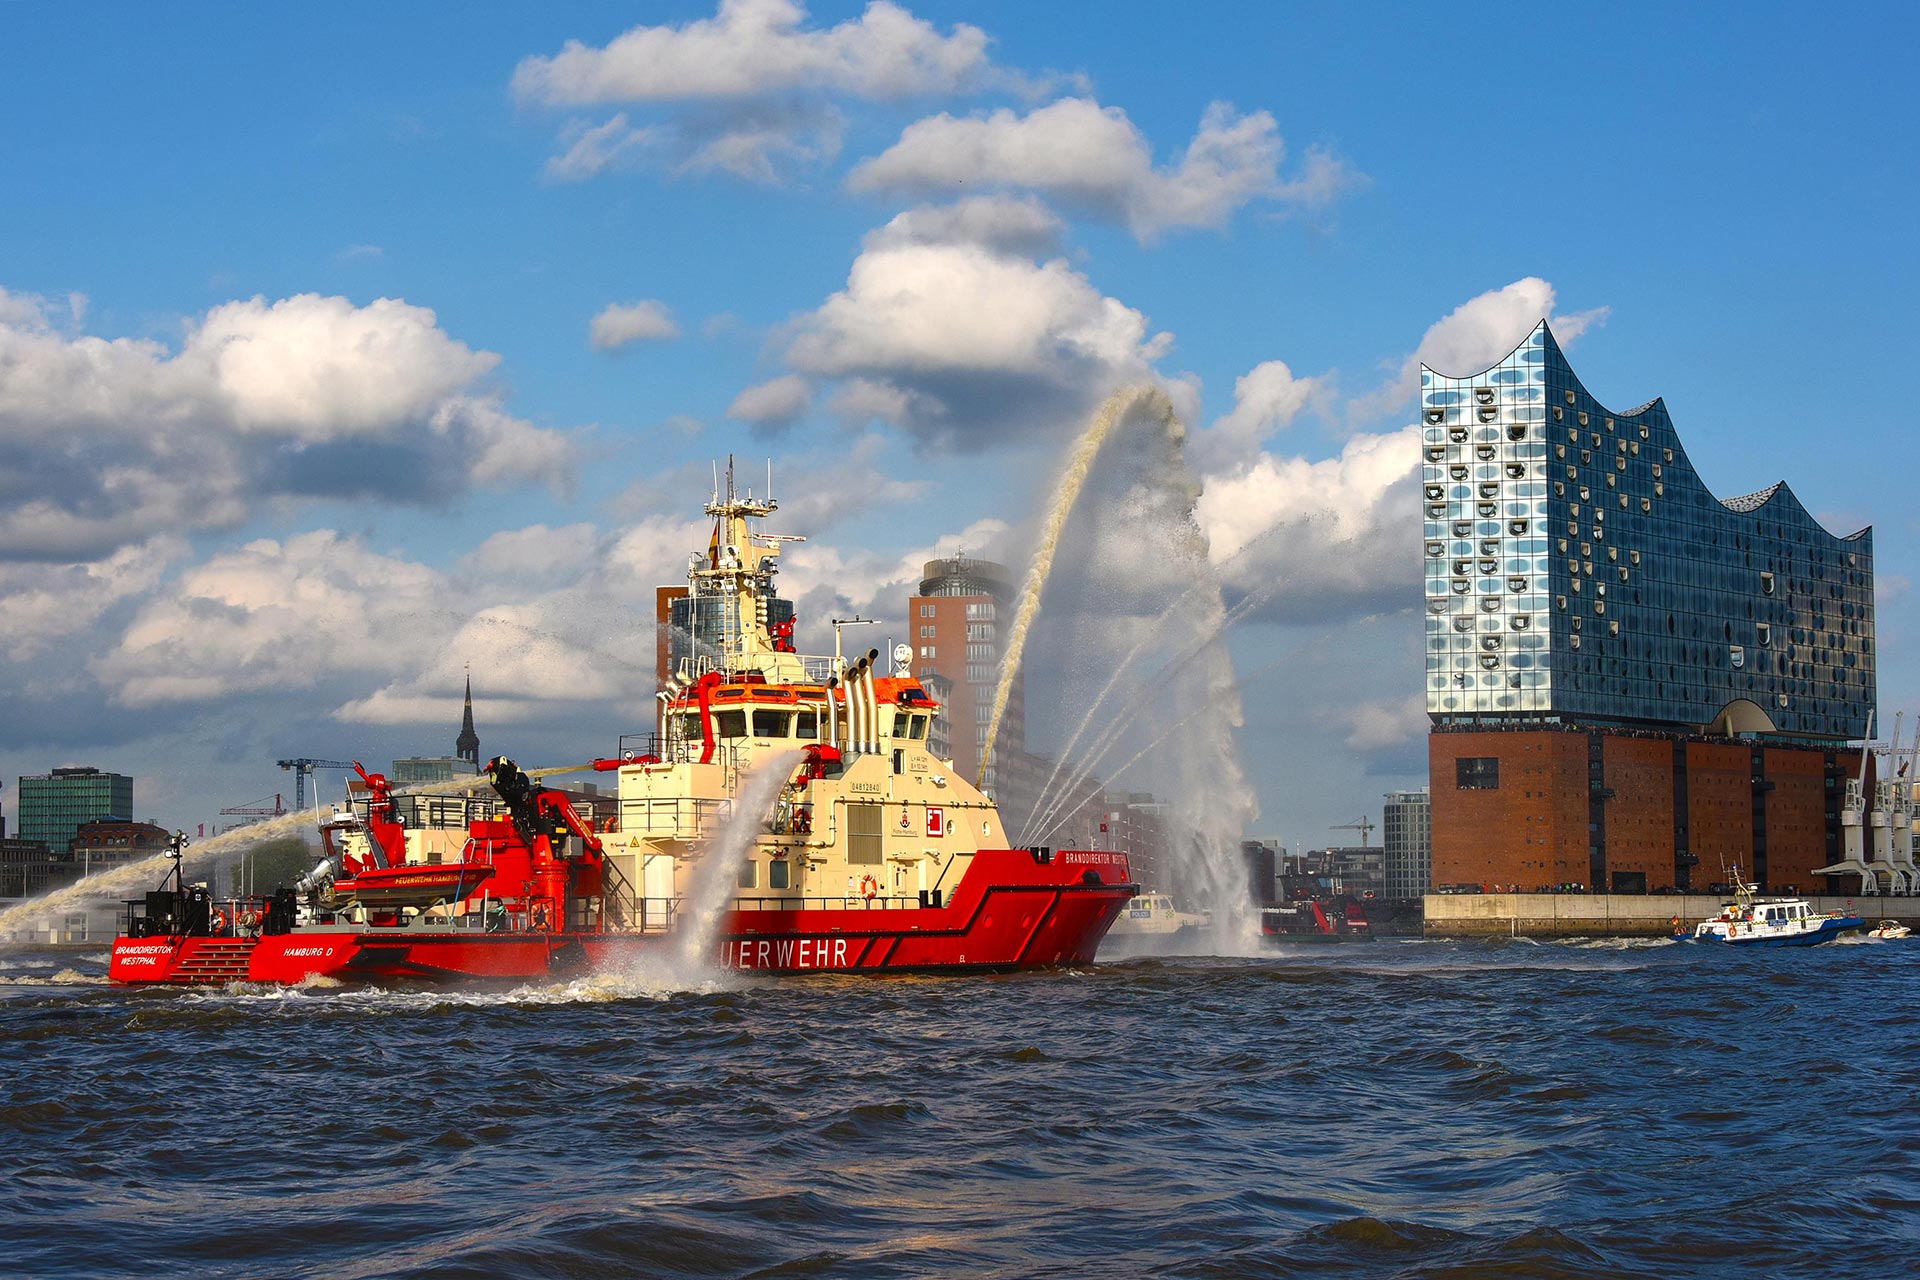 Flotte Hamburg (Hamburg Fleet)